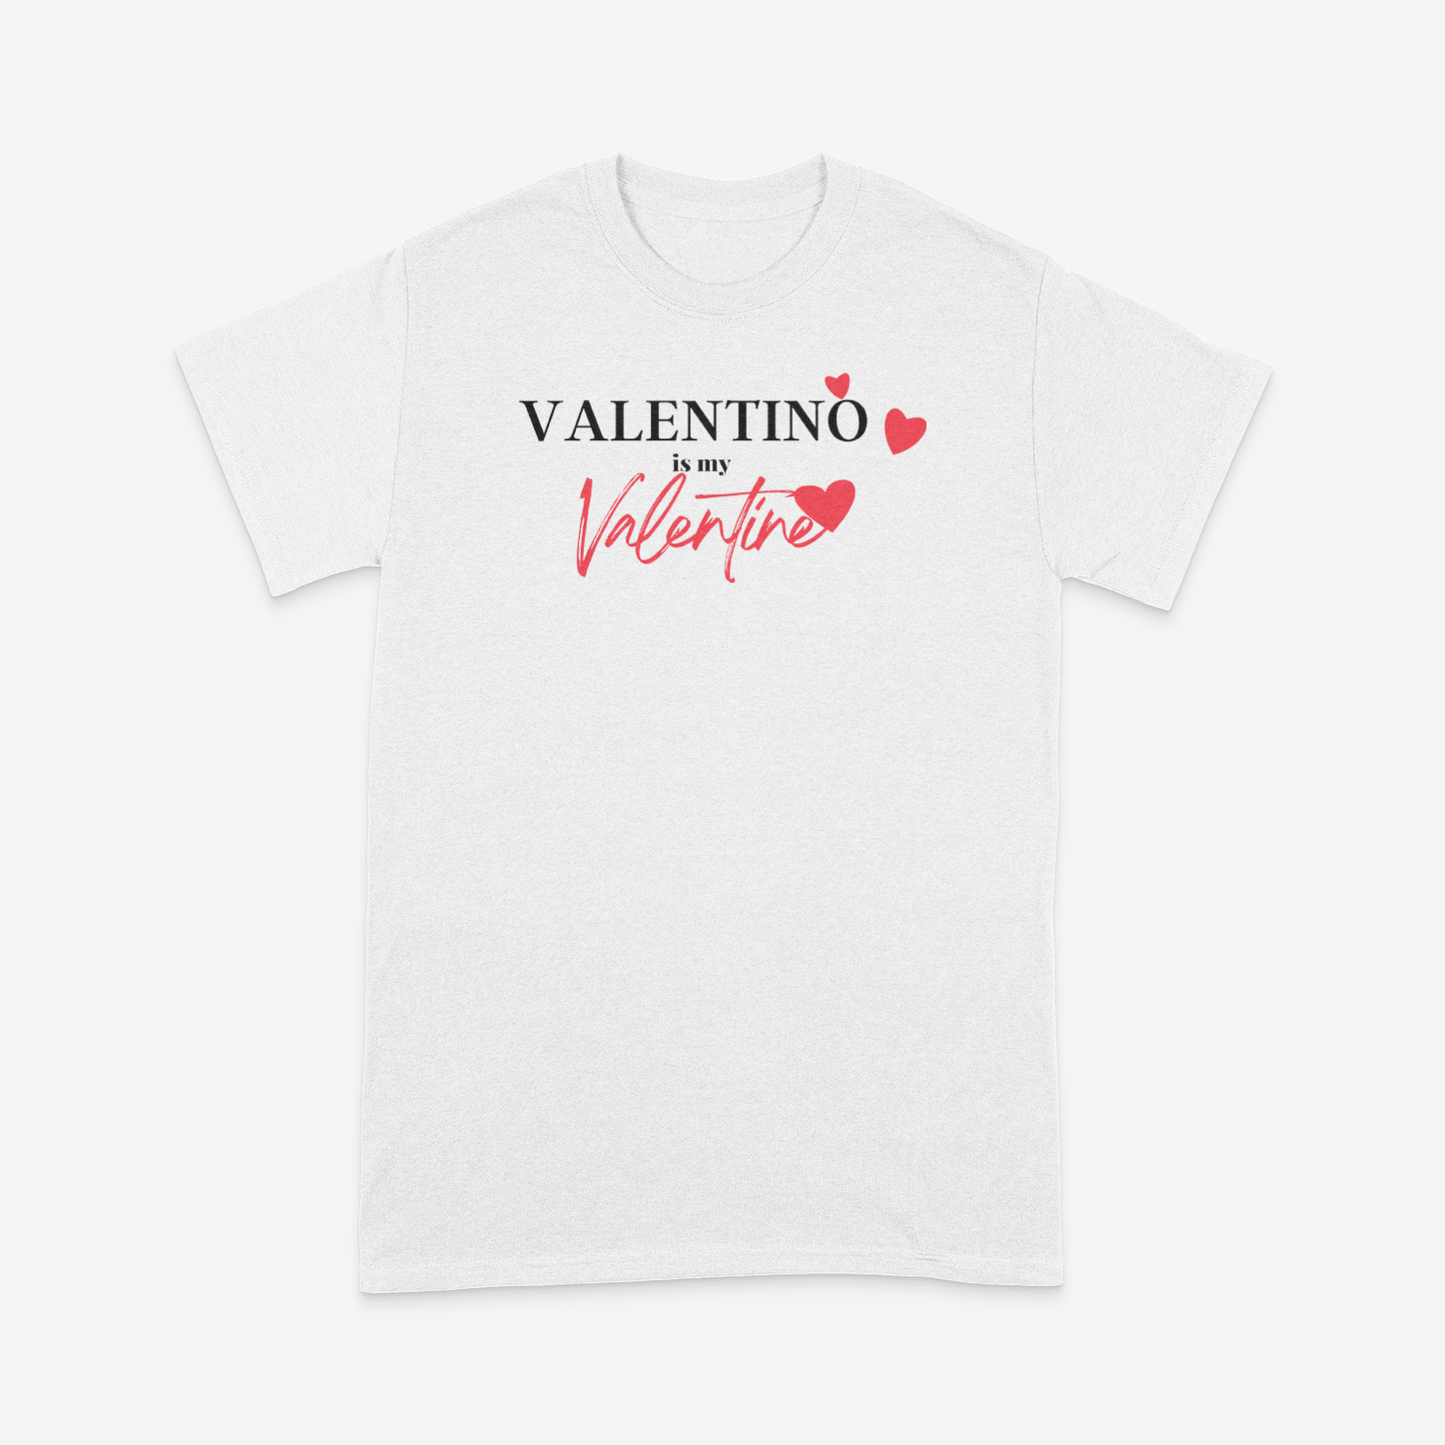 Valentino is my Valentine Tee